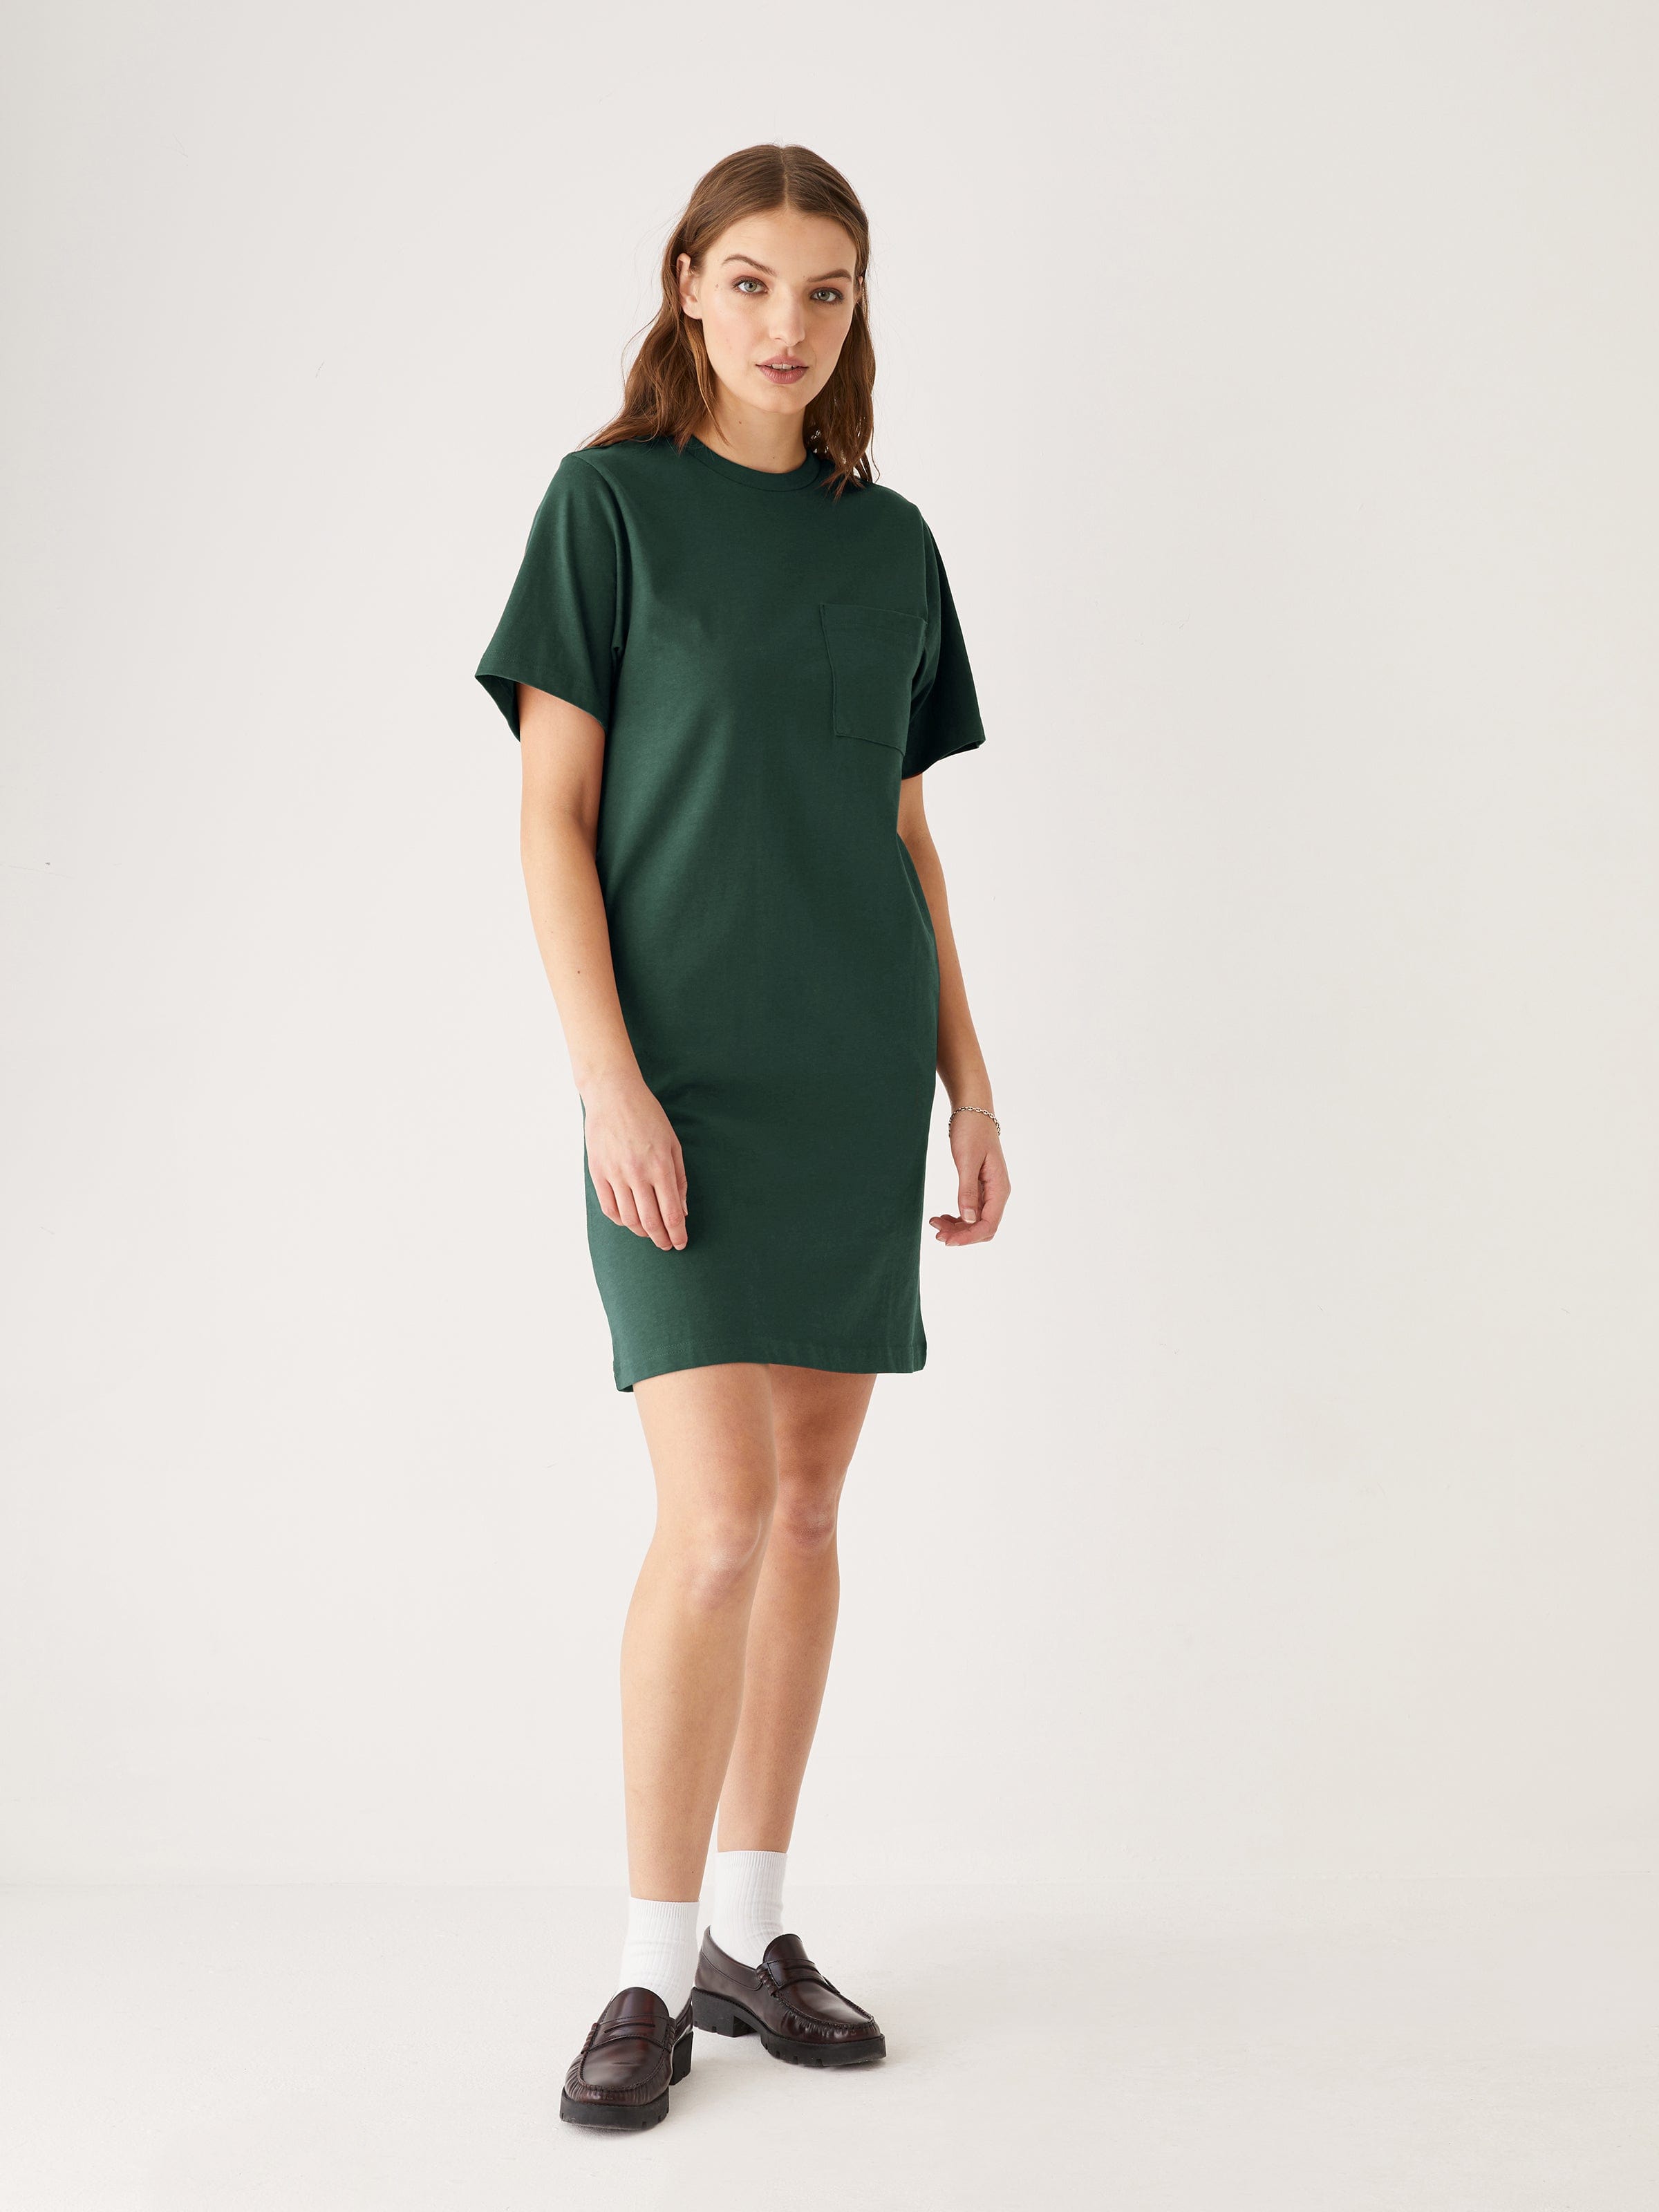 Intensiv Soar bjærgning The T-Shirt Dress in Dark Green – Frank And Oak USA